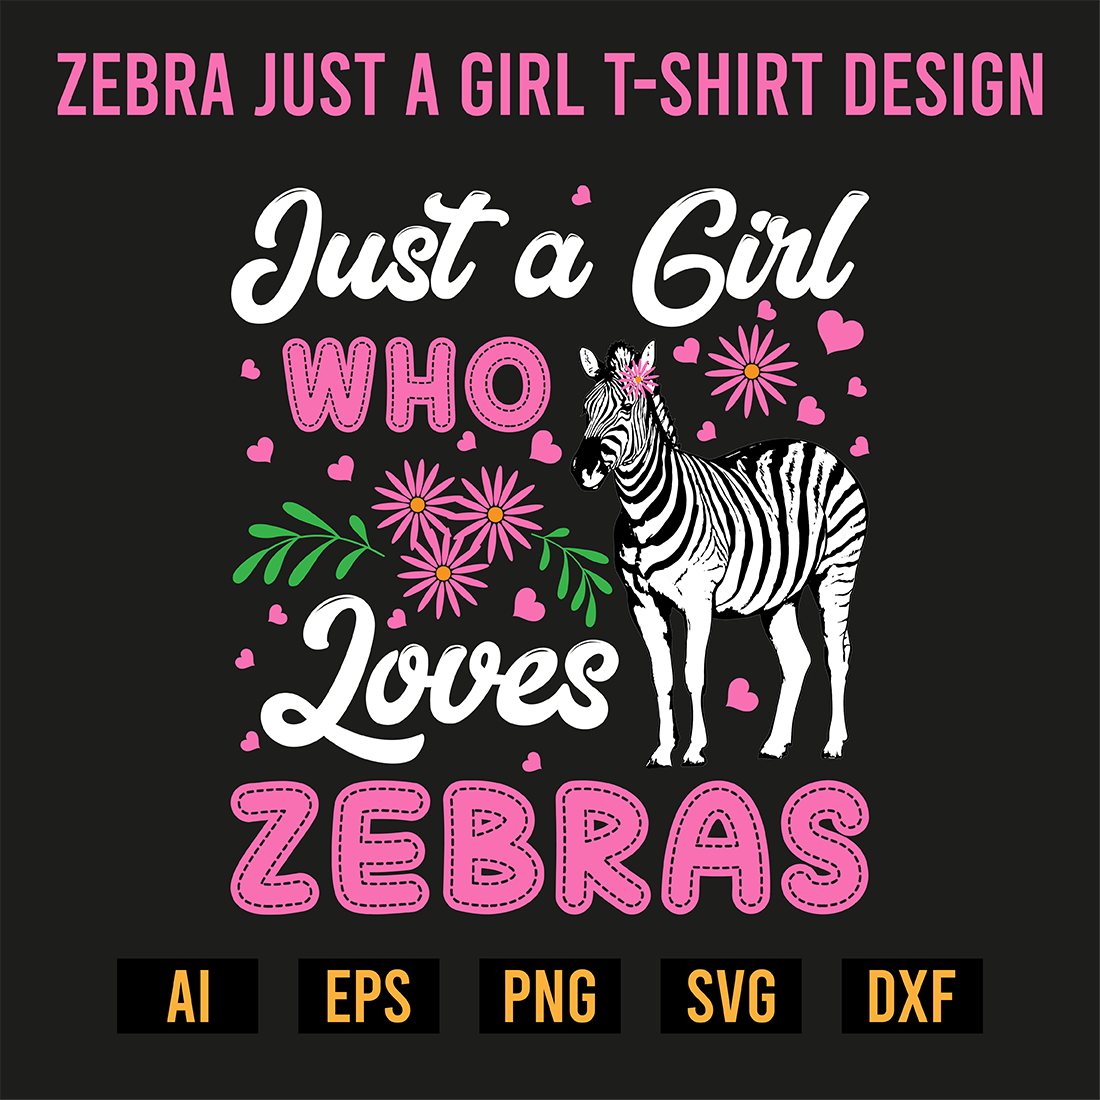 Zebra Just a Girl T-Shirt Design preview image.